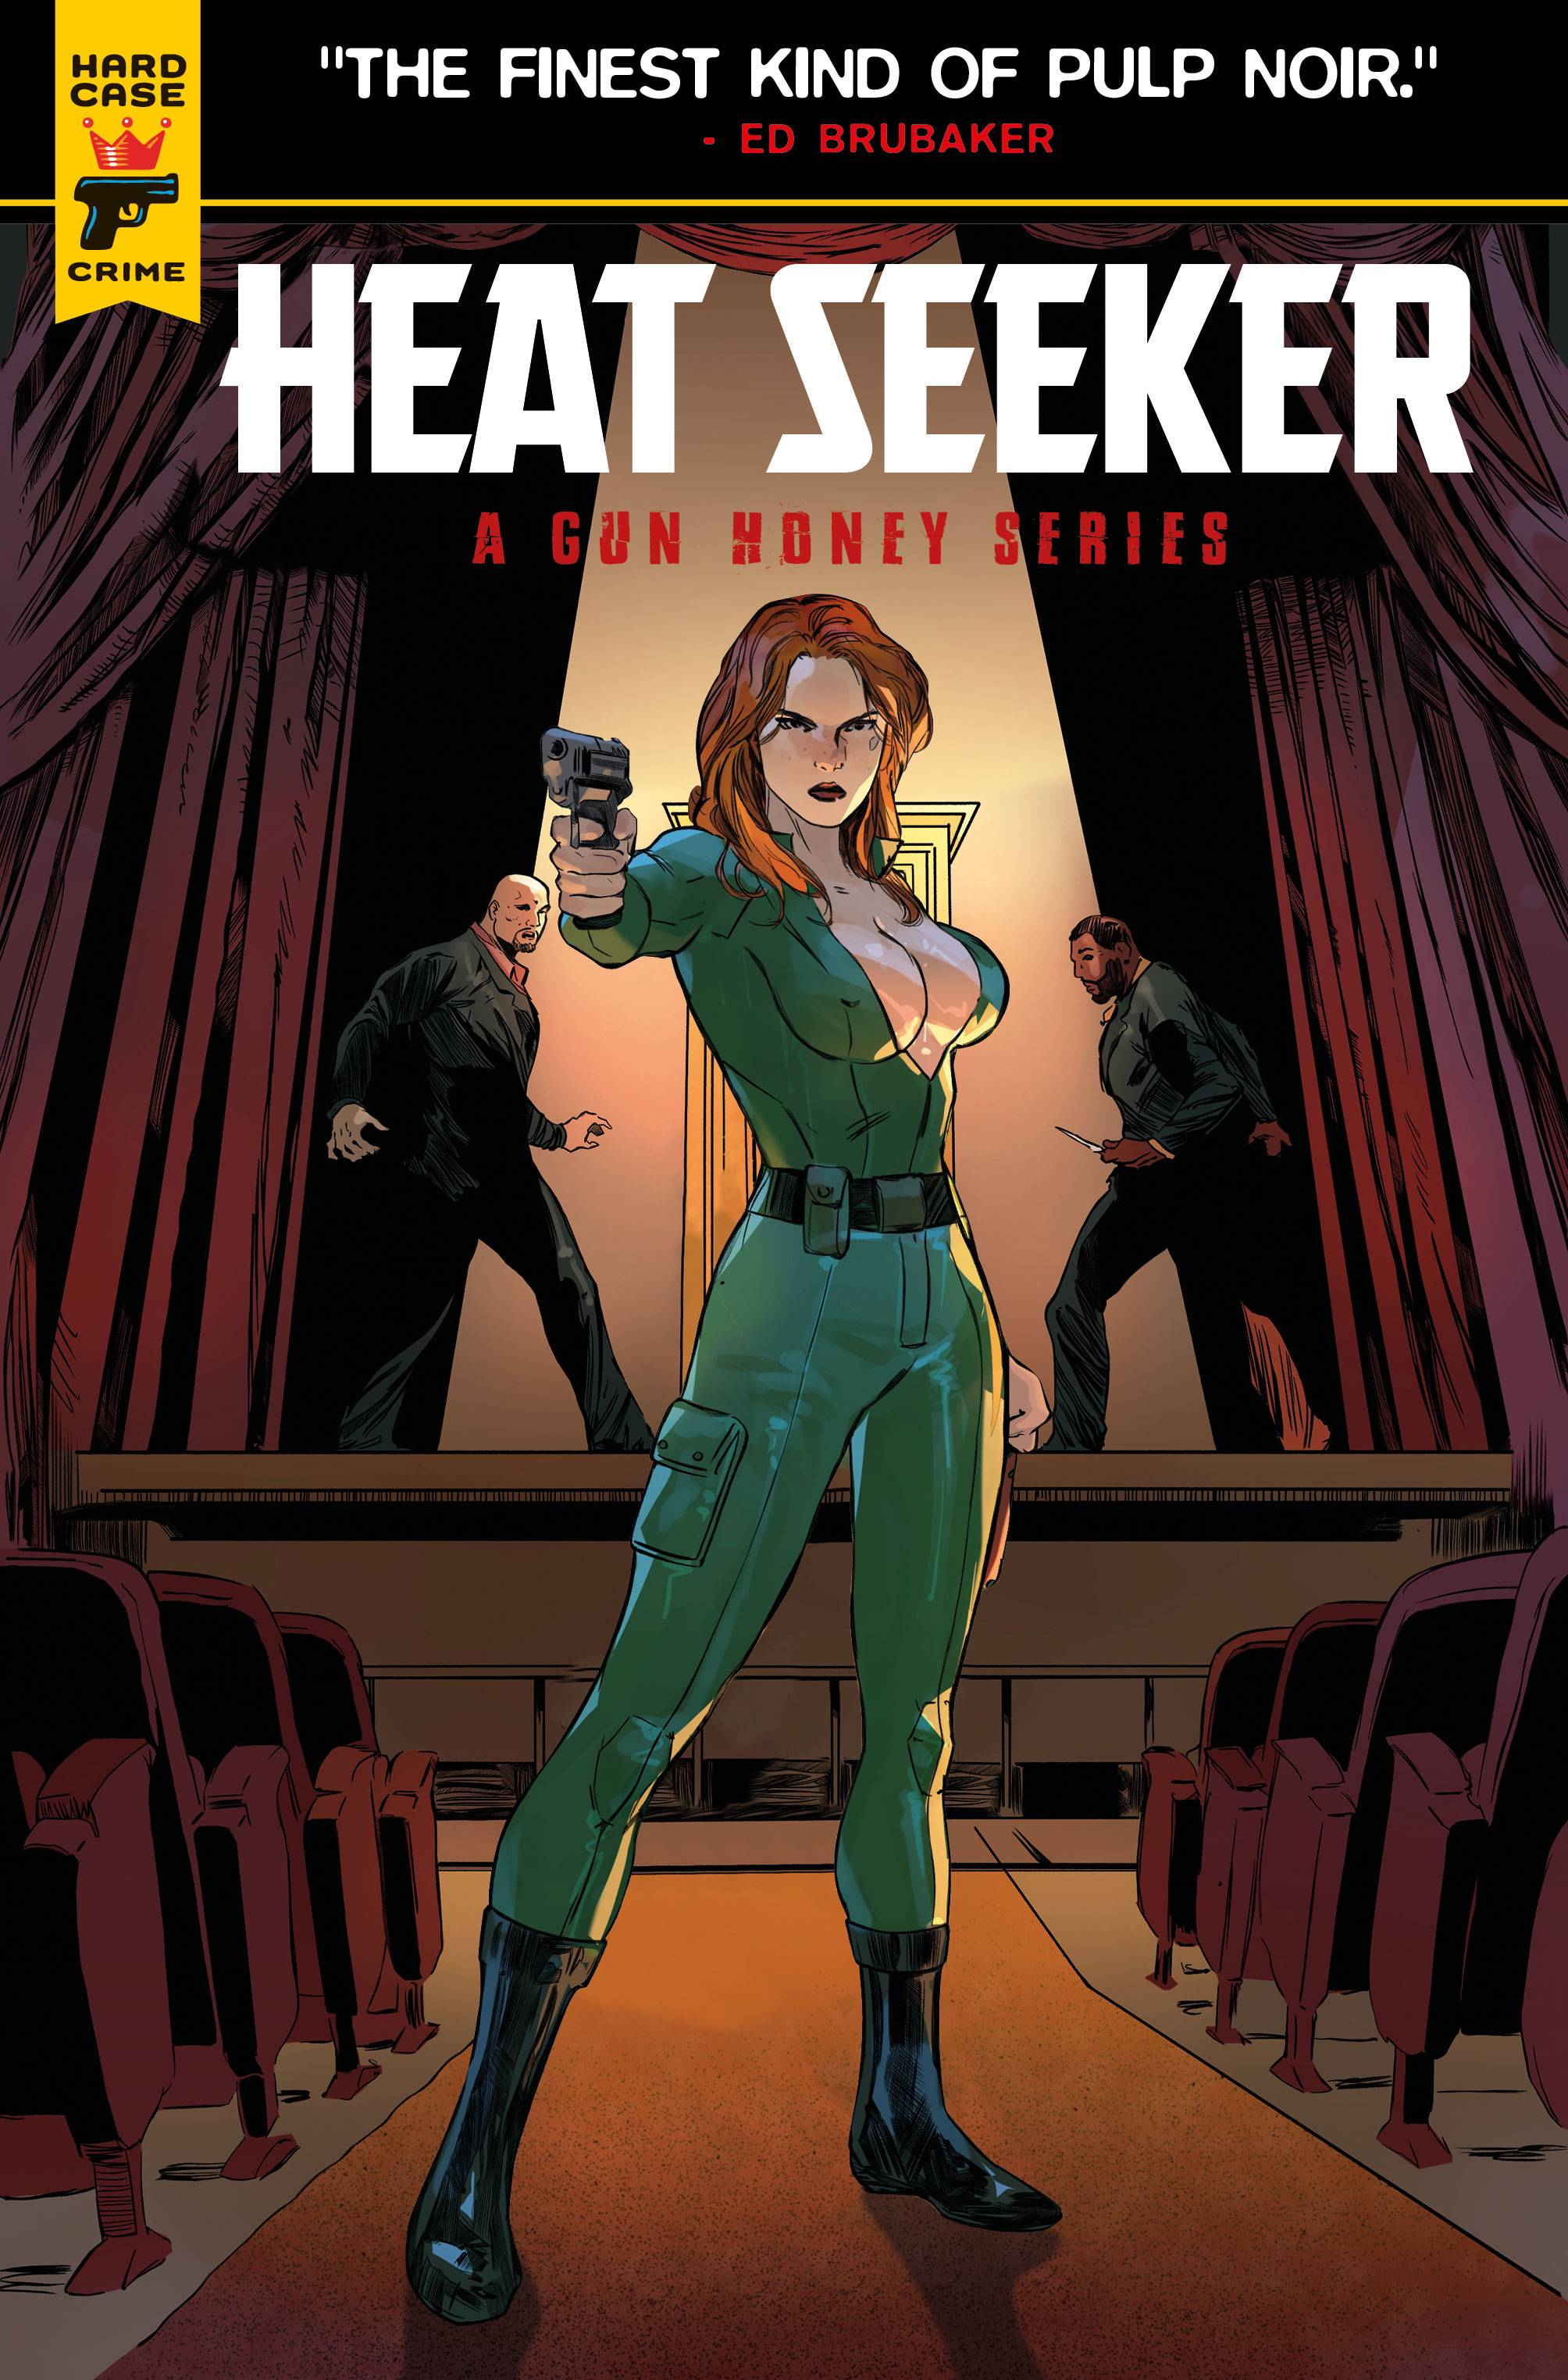 Heat seeker comics